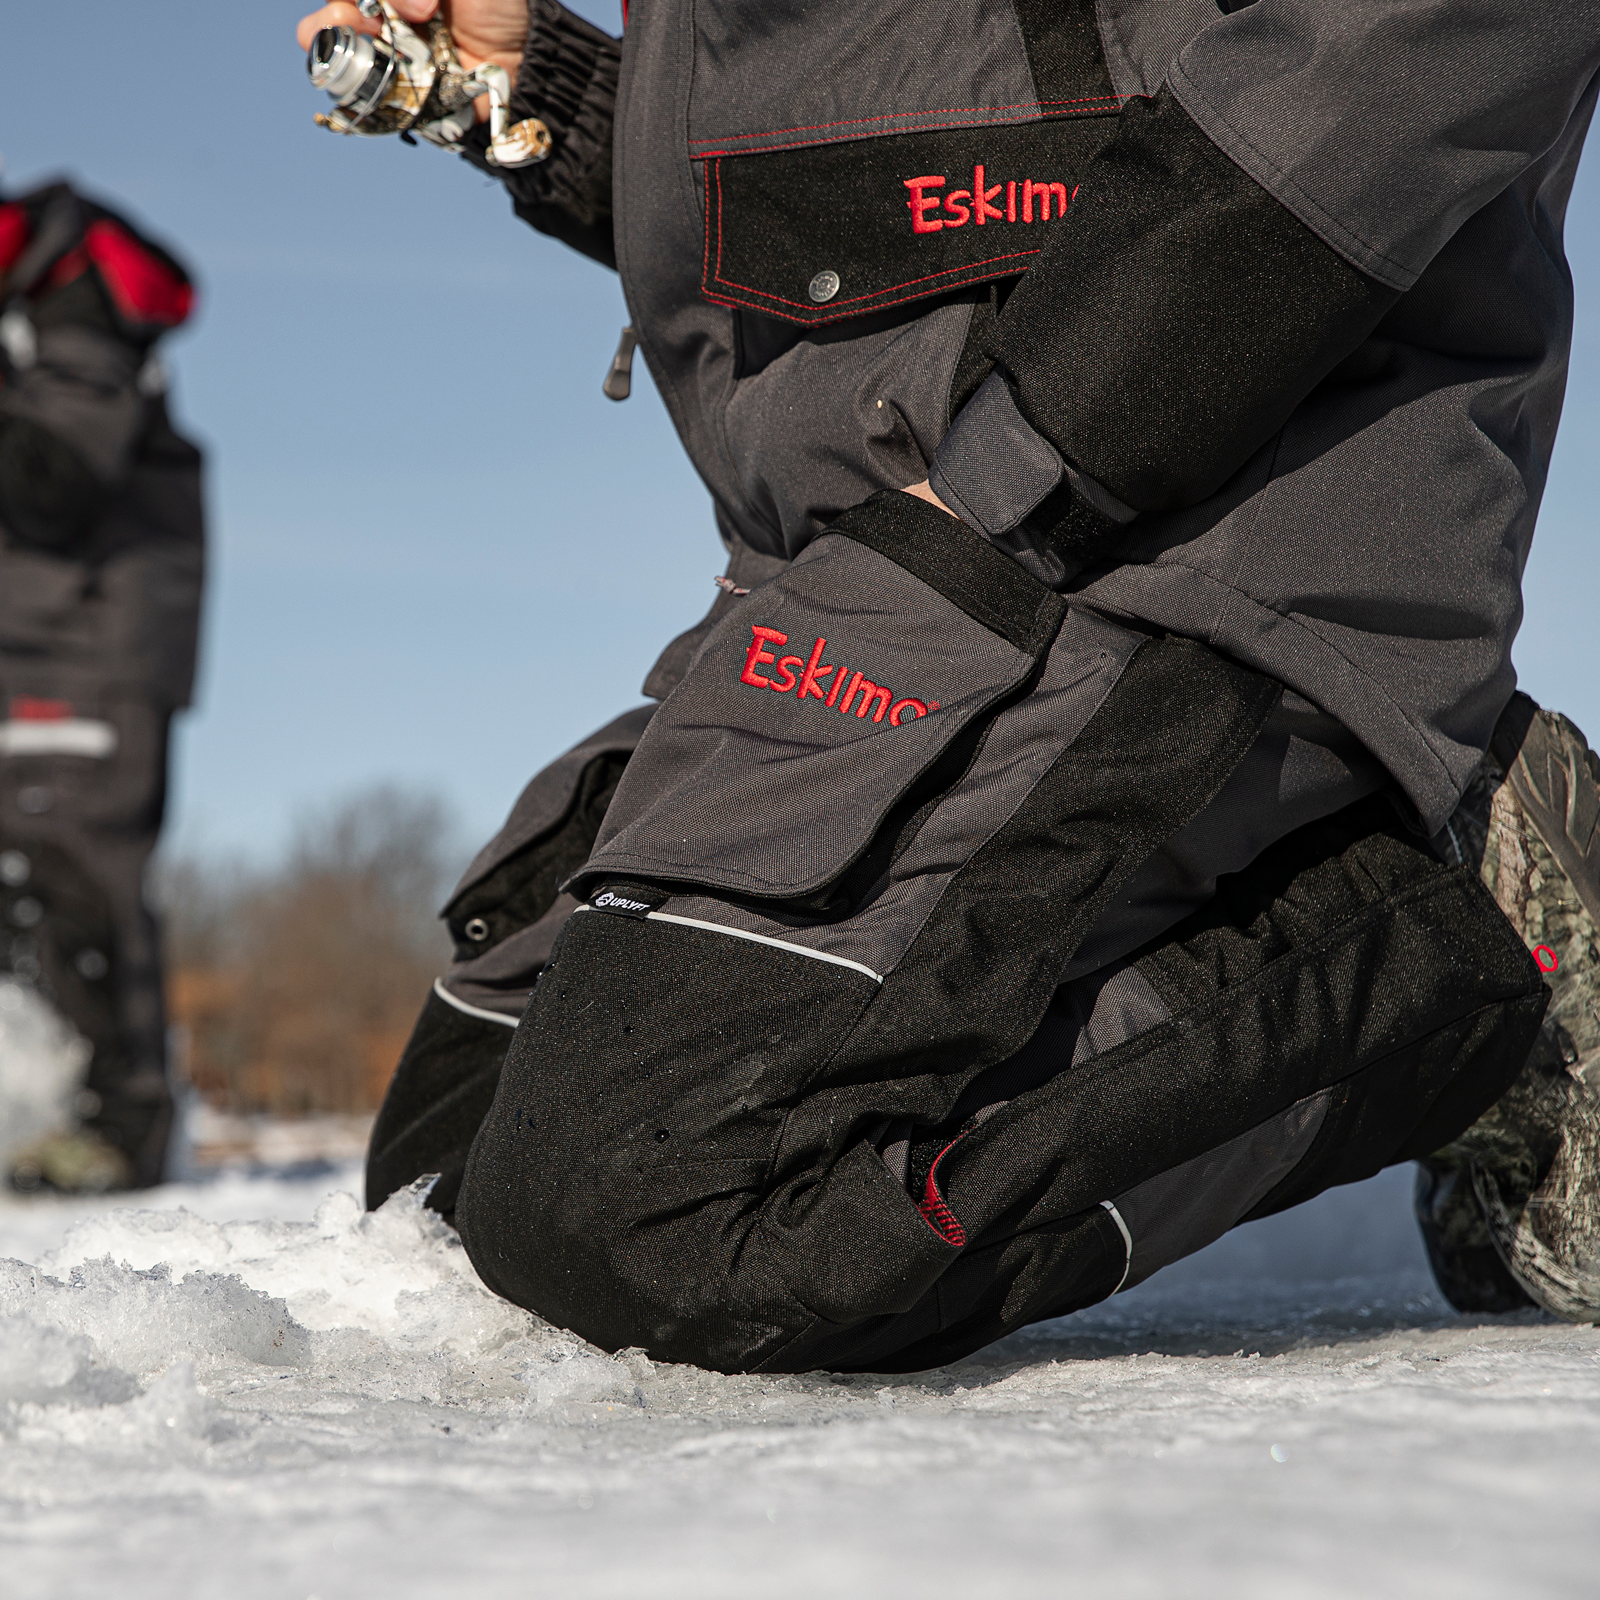 The Best Ice Fishing Bibs? Eskimo Keeper Bibs One Year Review